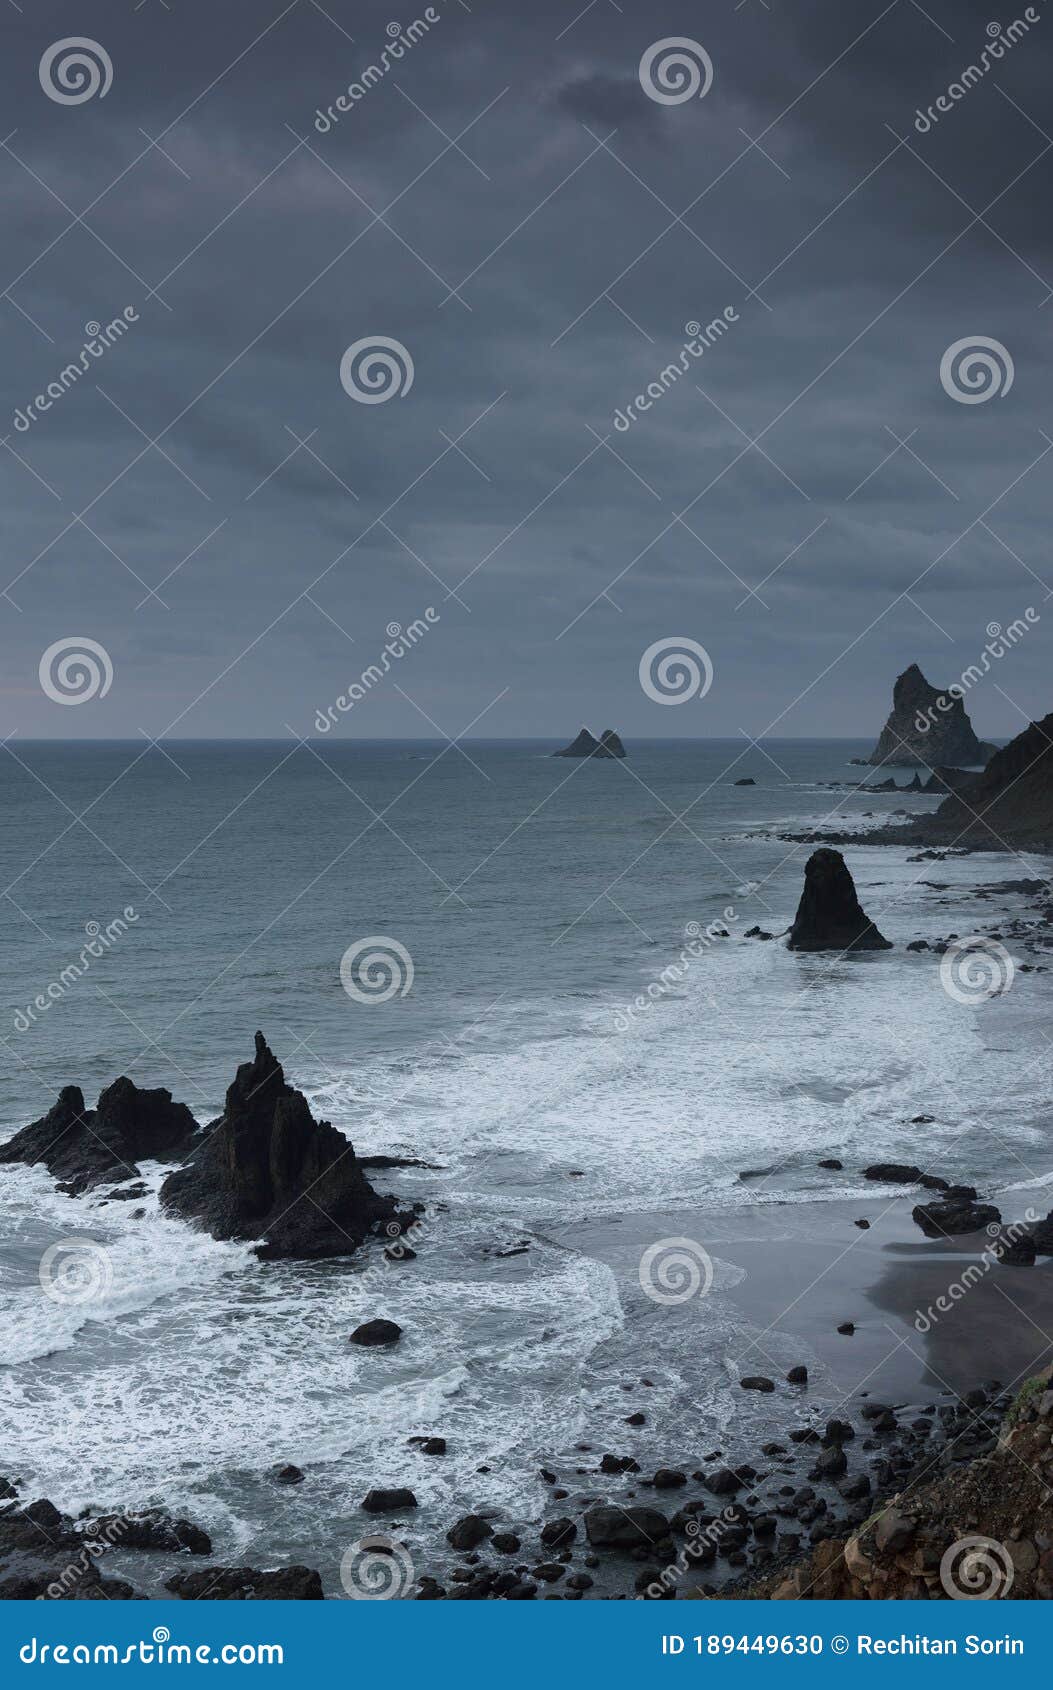 roques de anaga, the north-east coast of tenerife island.